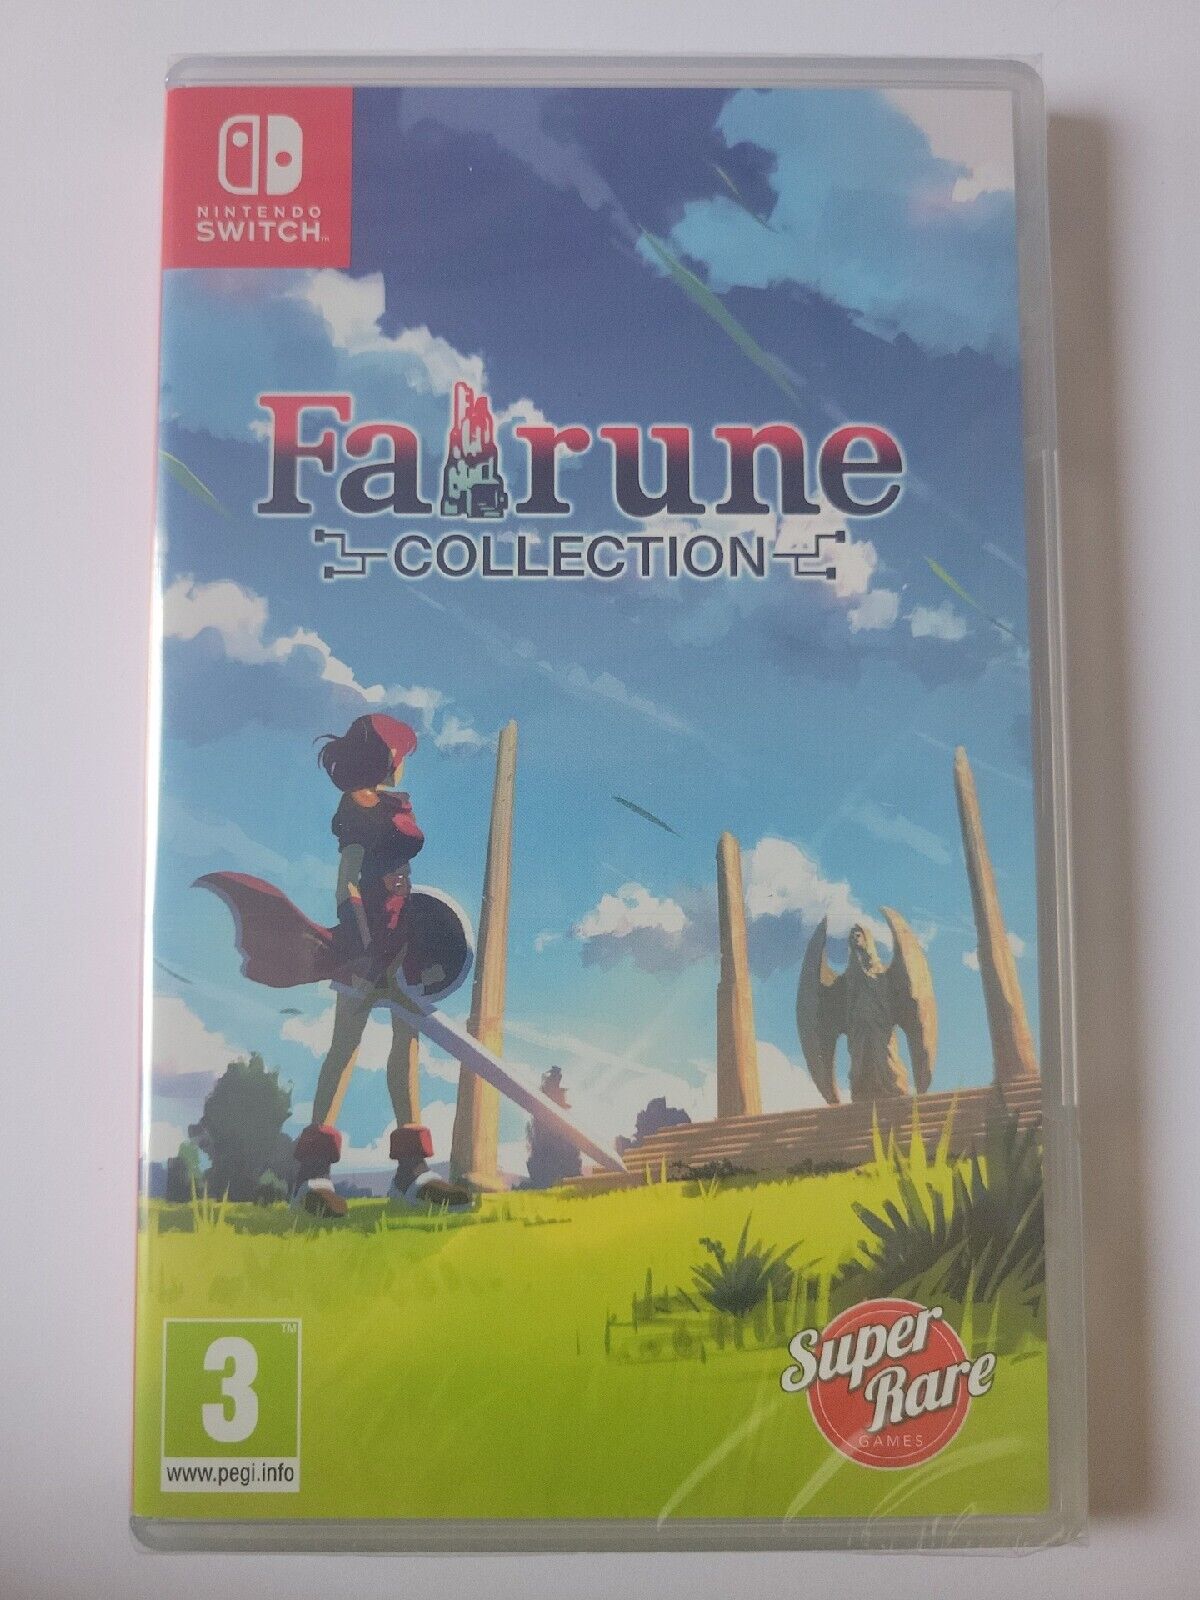 SEALED - Fairune Collection - Nintendo Switch - Super Rare Games #14